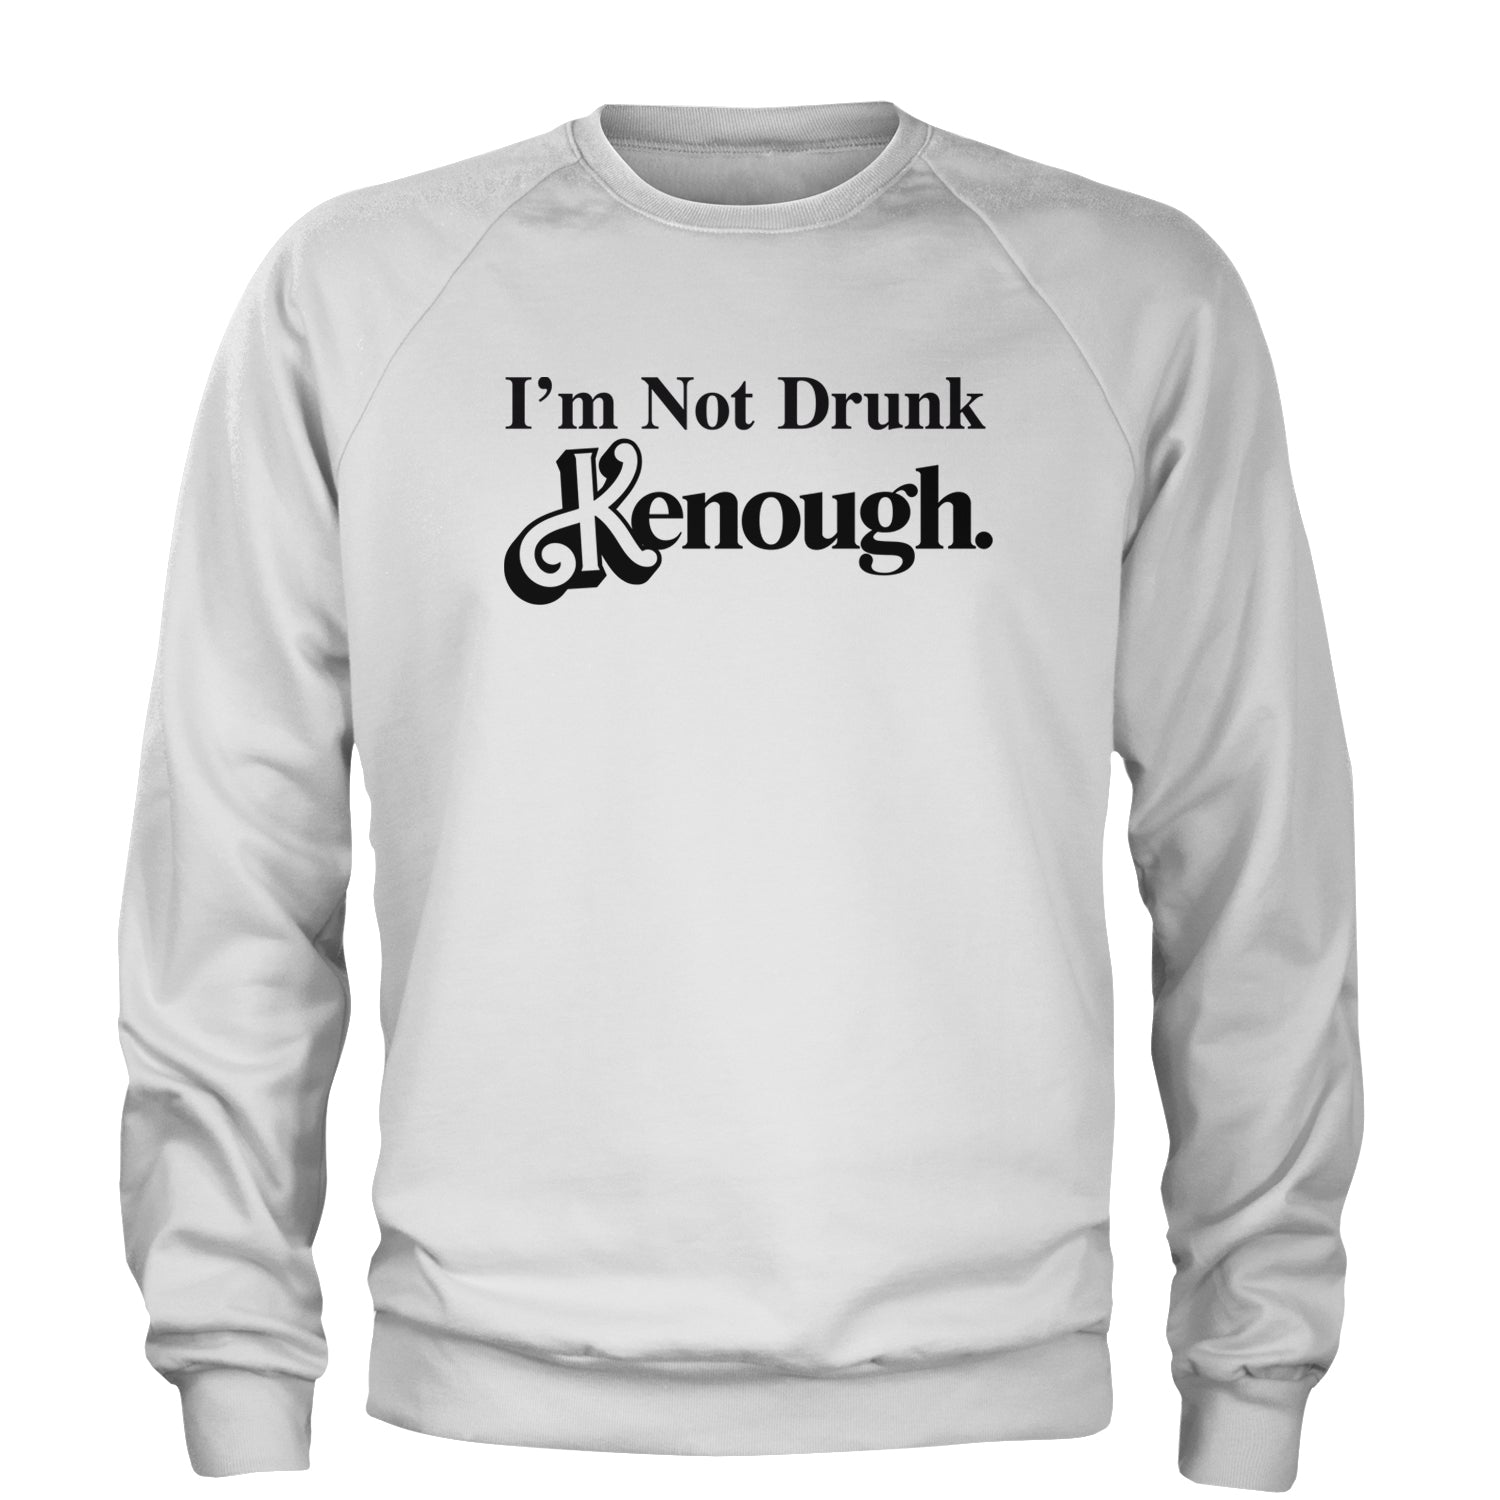 I'm Not Drunk Kenough Barbenheimer Adult Crewneck Sweatshirt